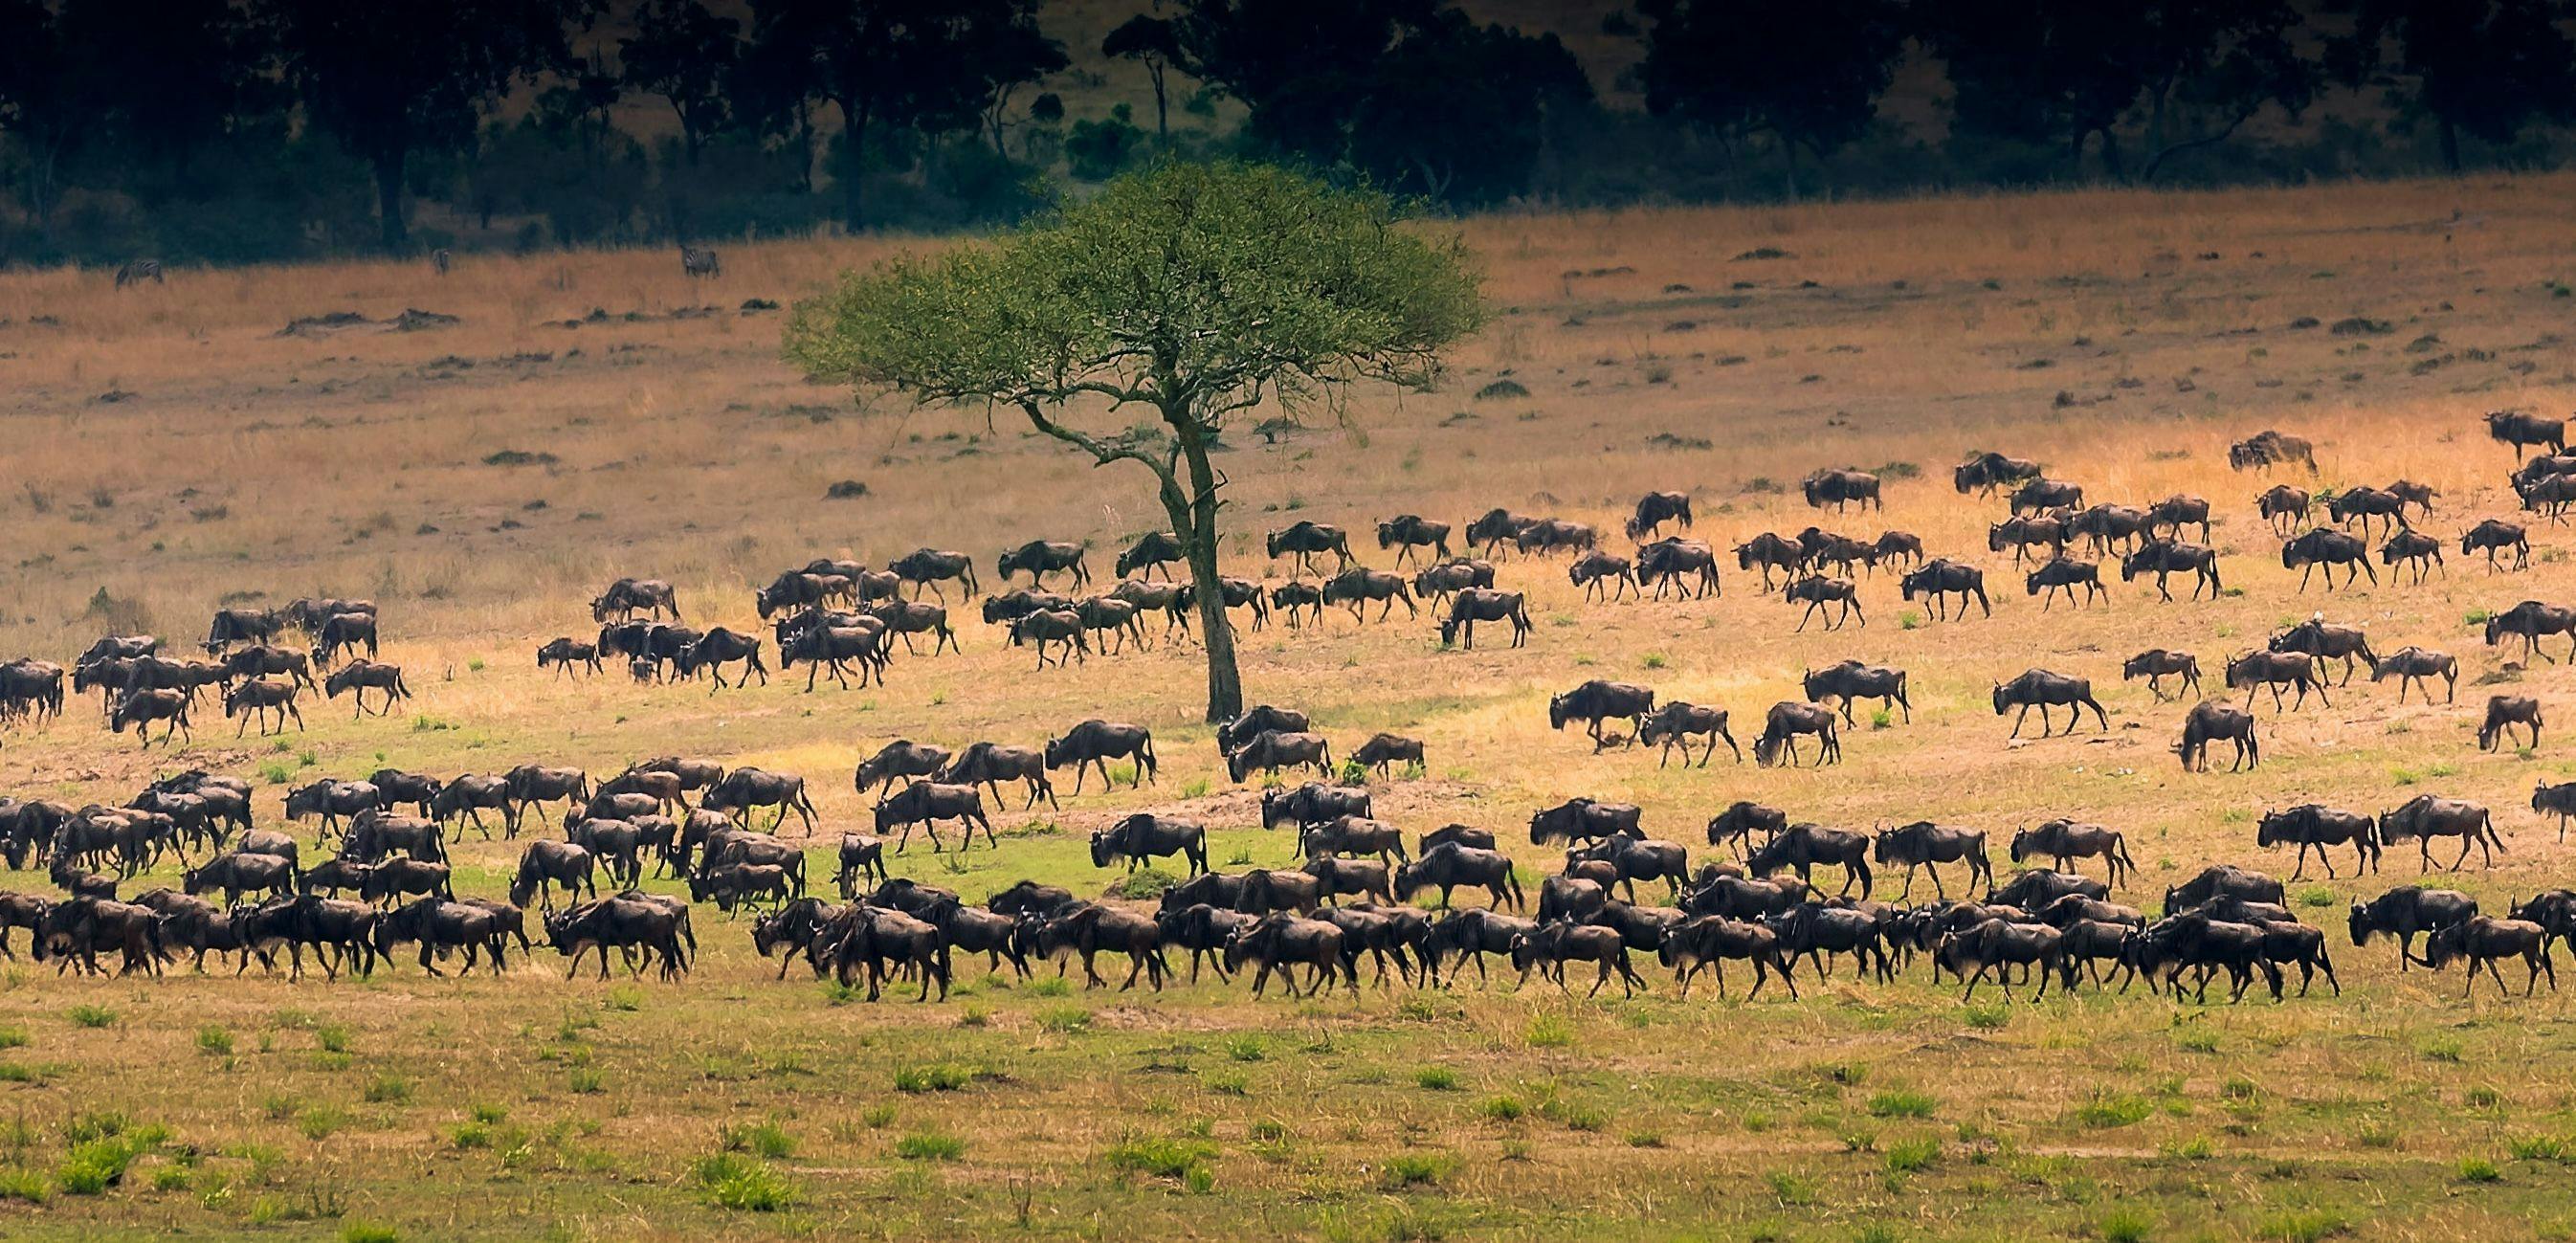 Great Wildebeest Migration in Serengeti national park in Tanzania